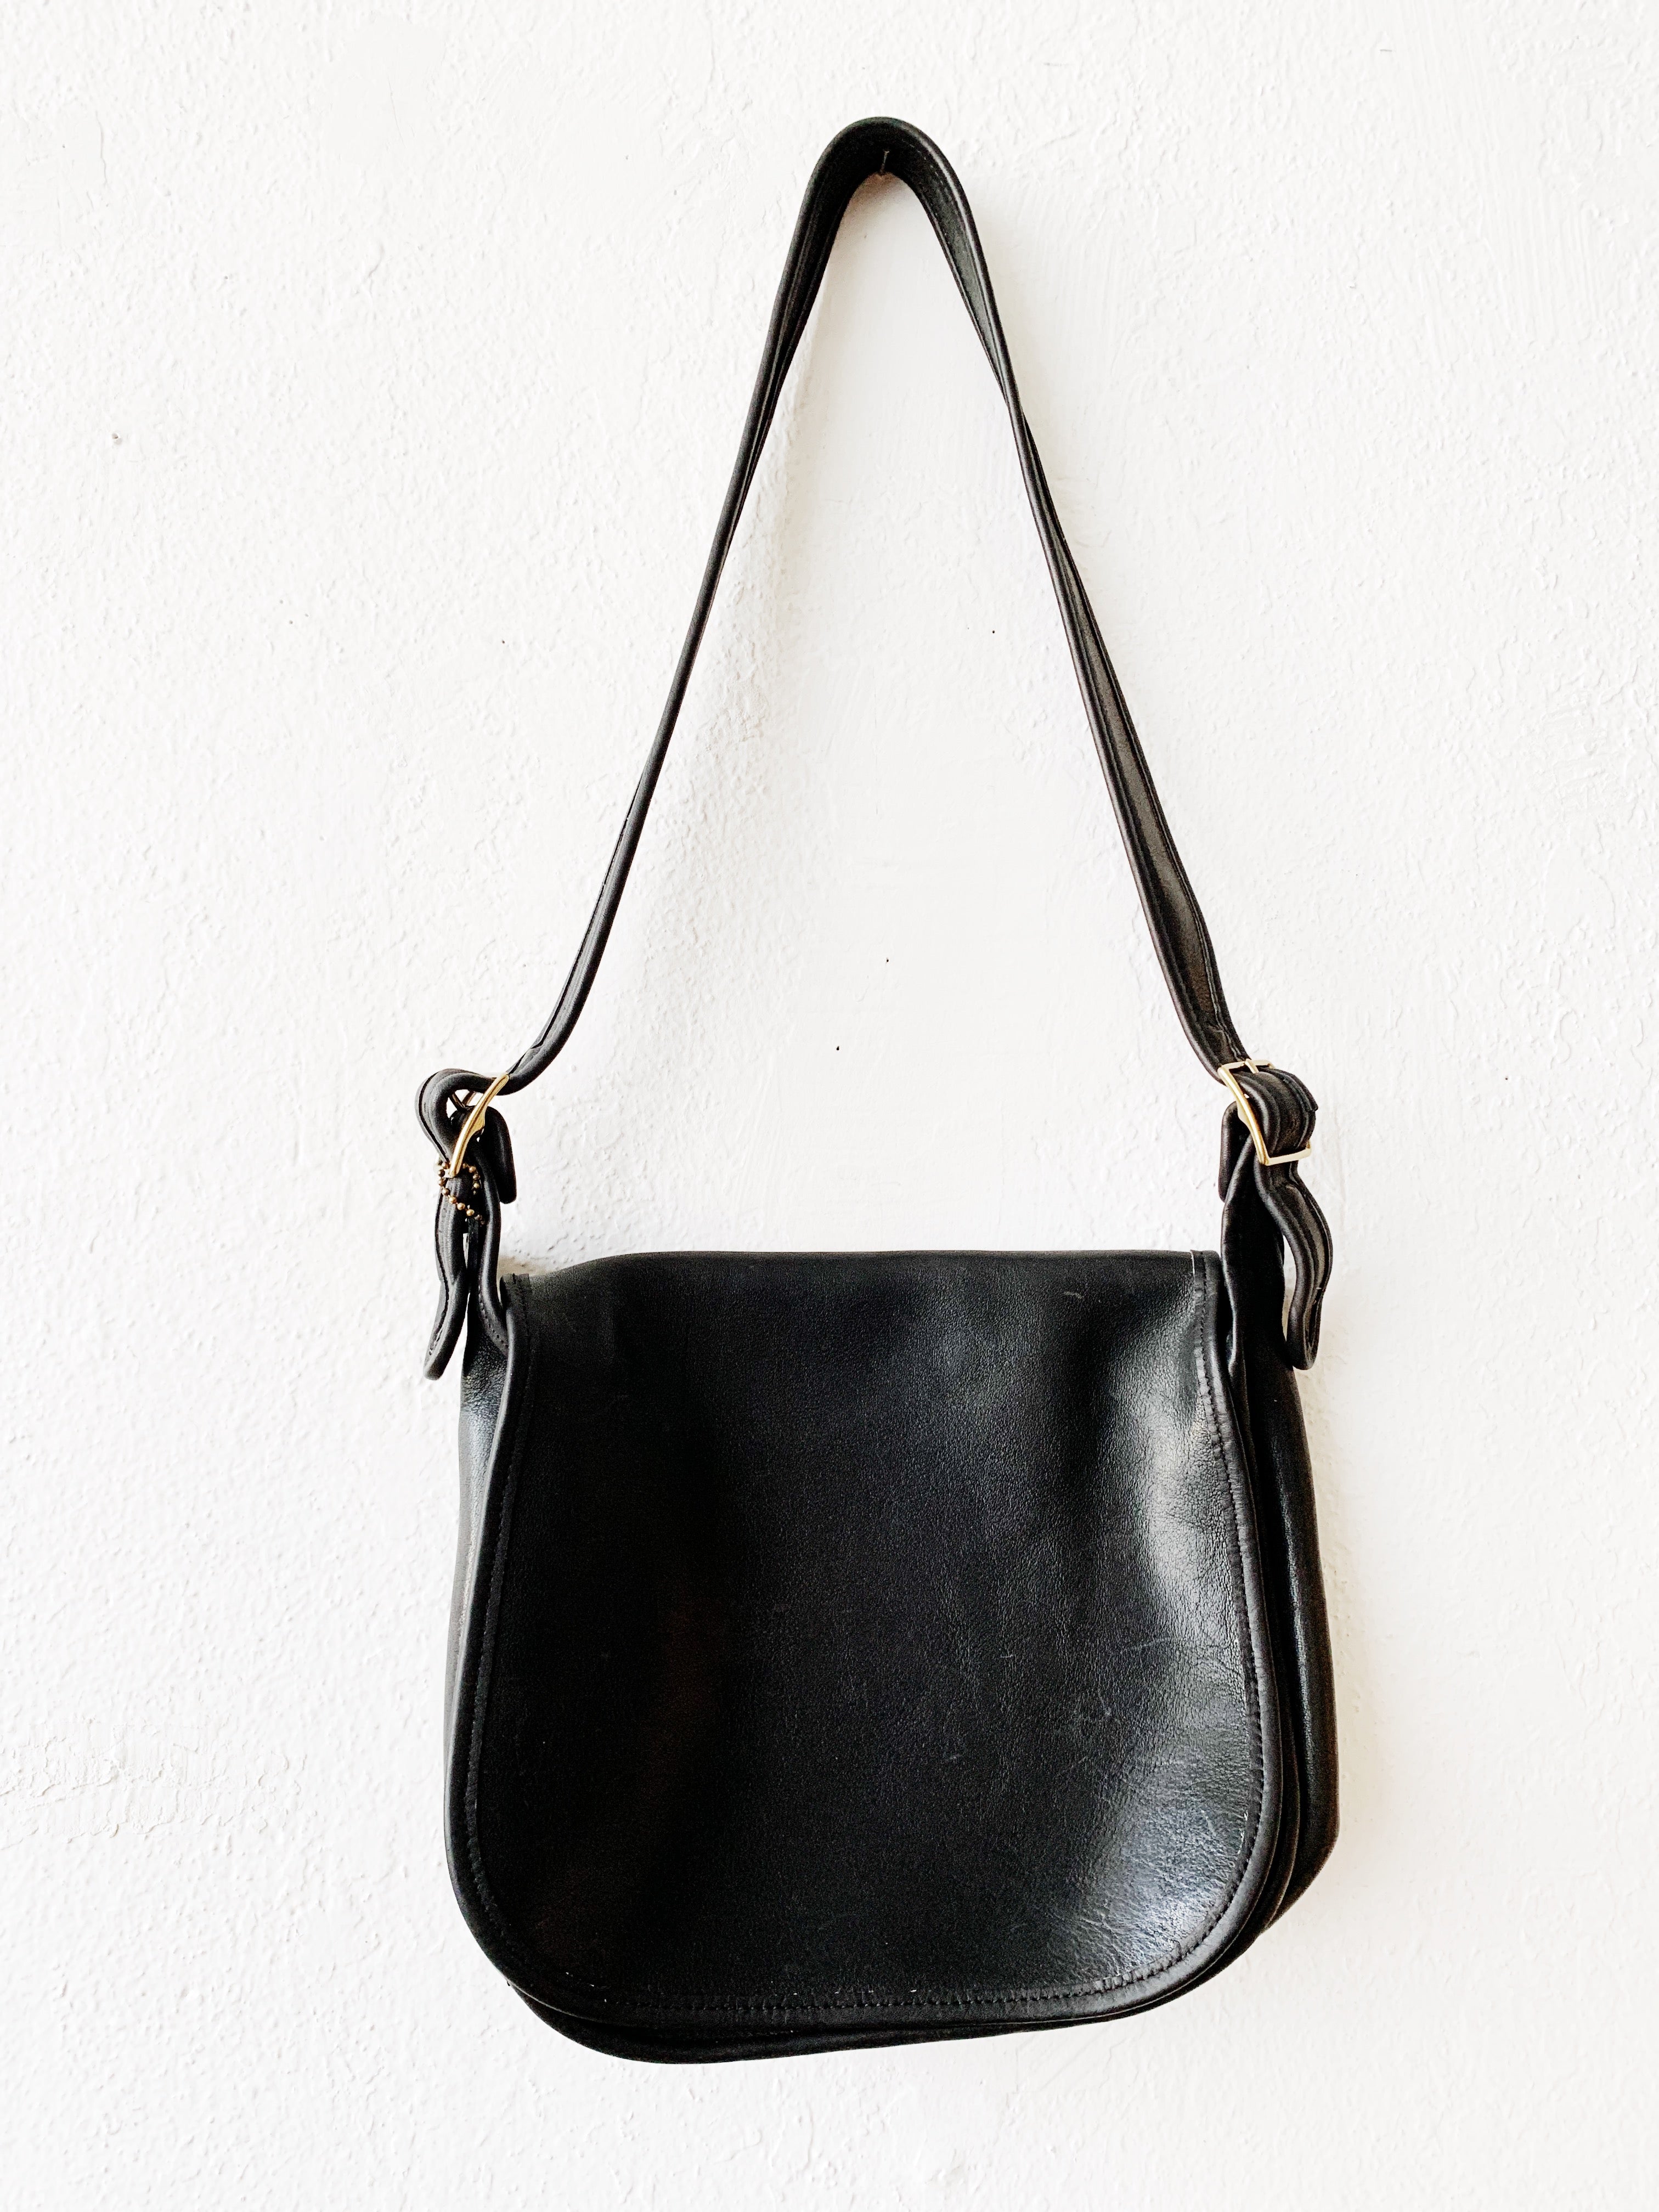 Coach Black Leather Handbag with Silver Hardware | eBay